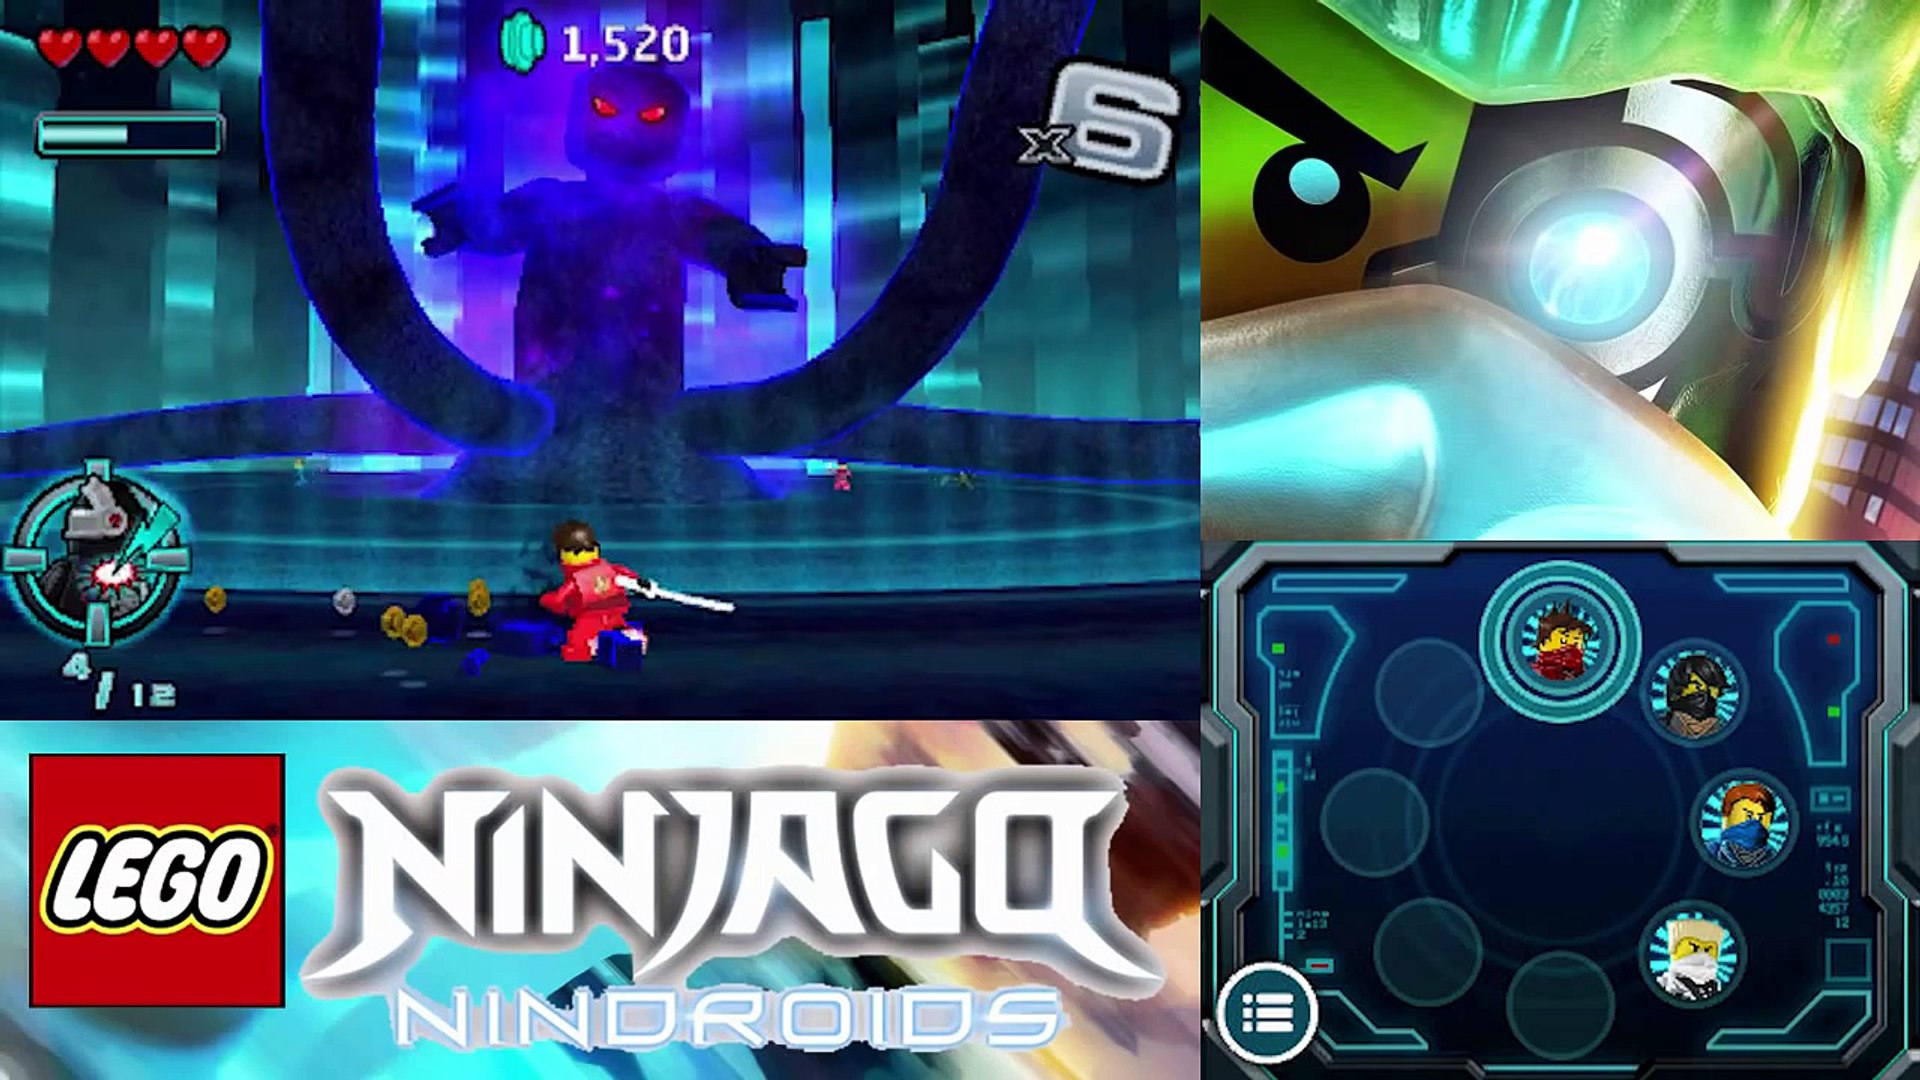 LEGO Ninjago: Nindroids (Video Game) - Final Boss Overlord Battle & Ending ( 3DS/Vita) - video Dailymotion